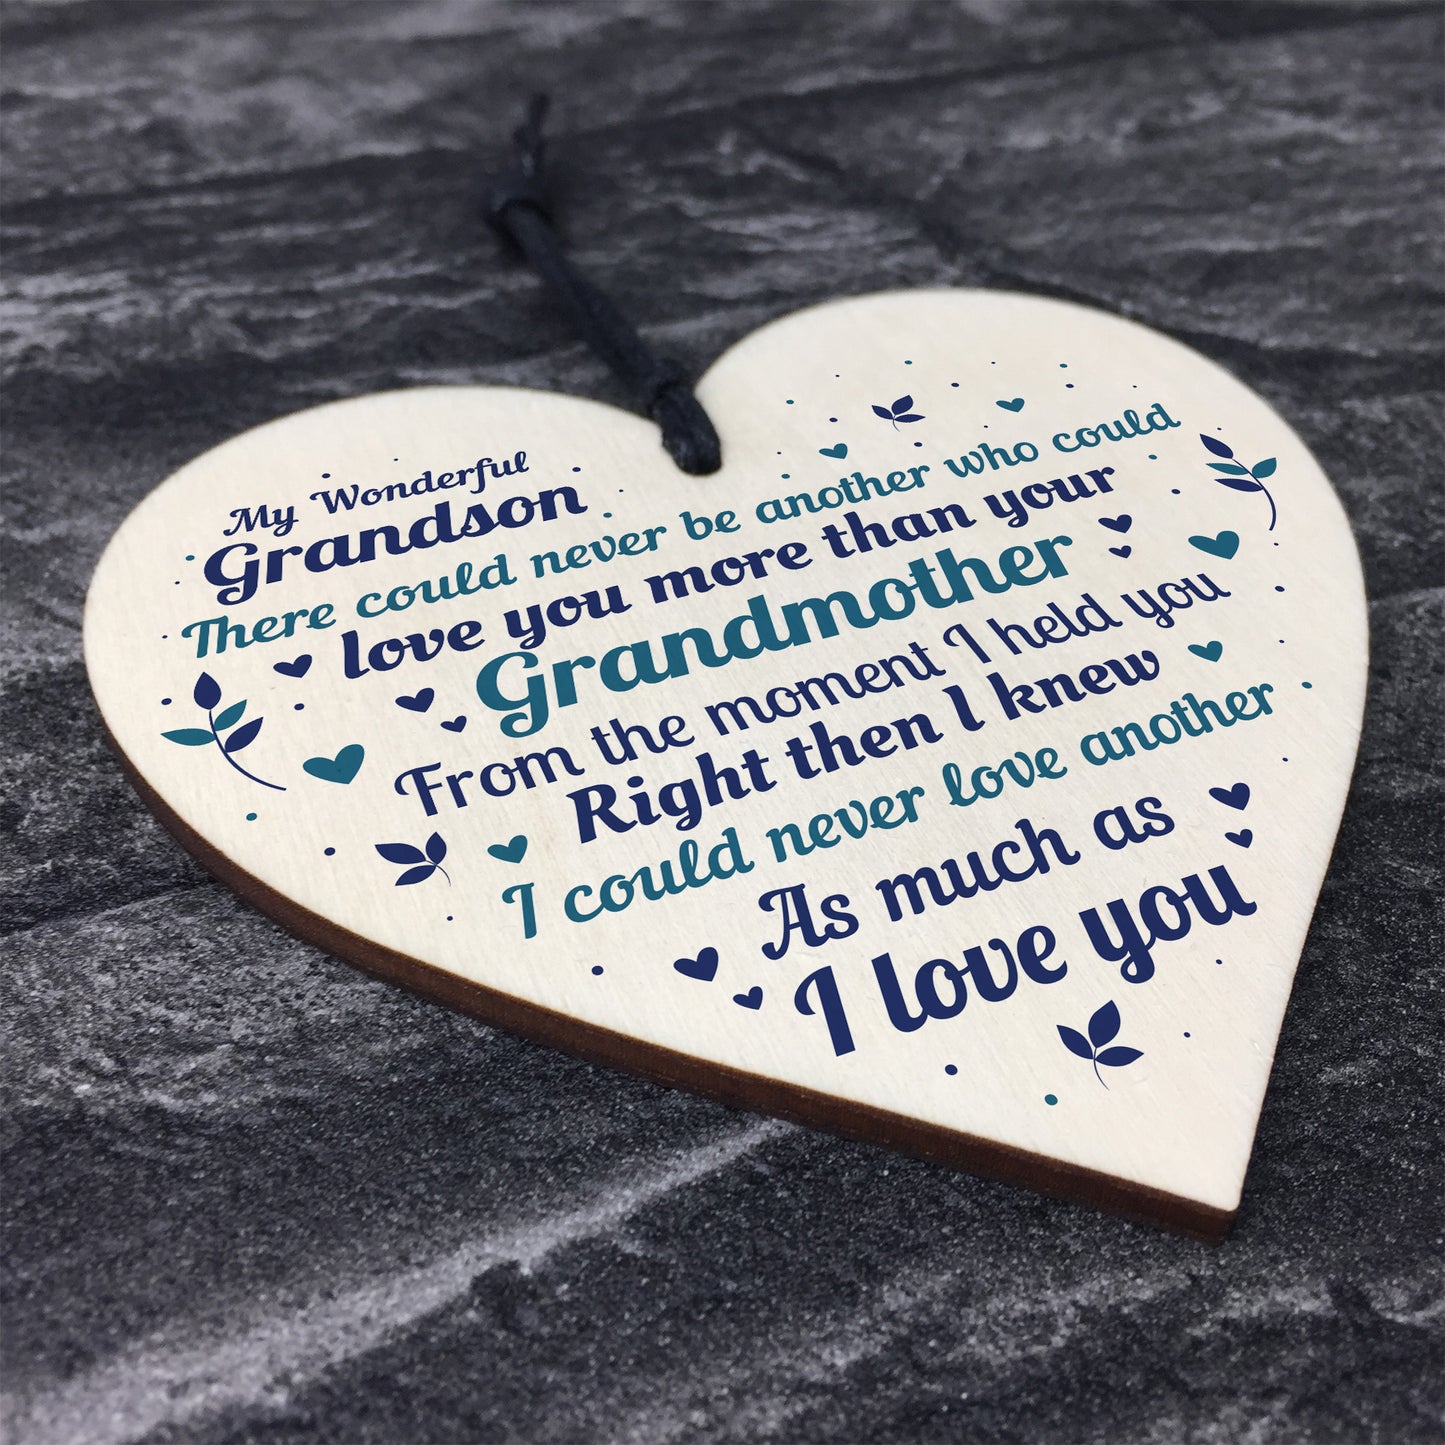 Birthday Gifts For Grandson From Grandparents Heart Keepsake